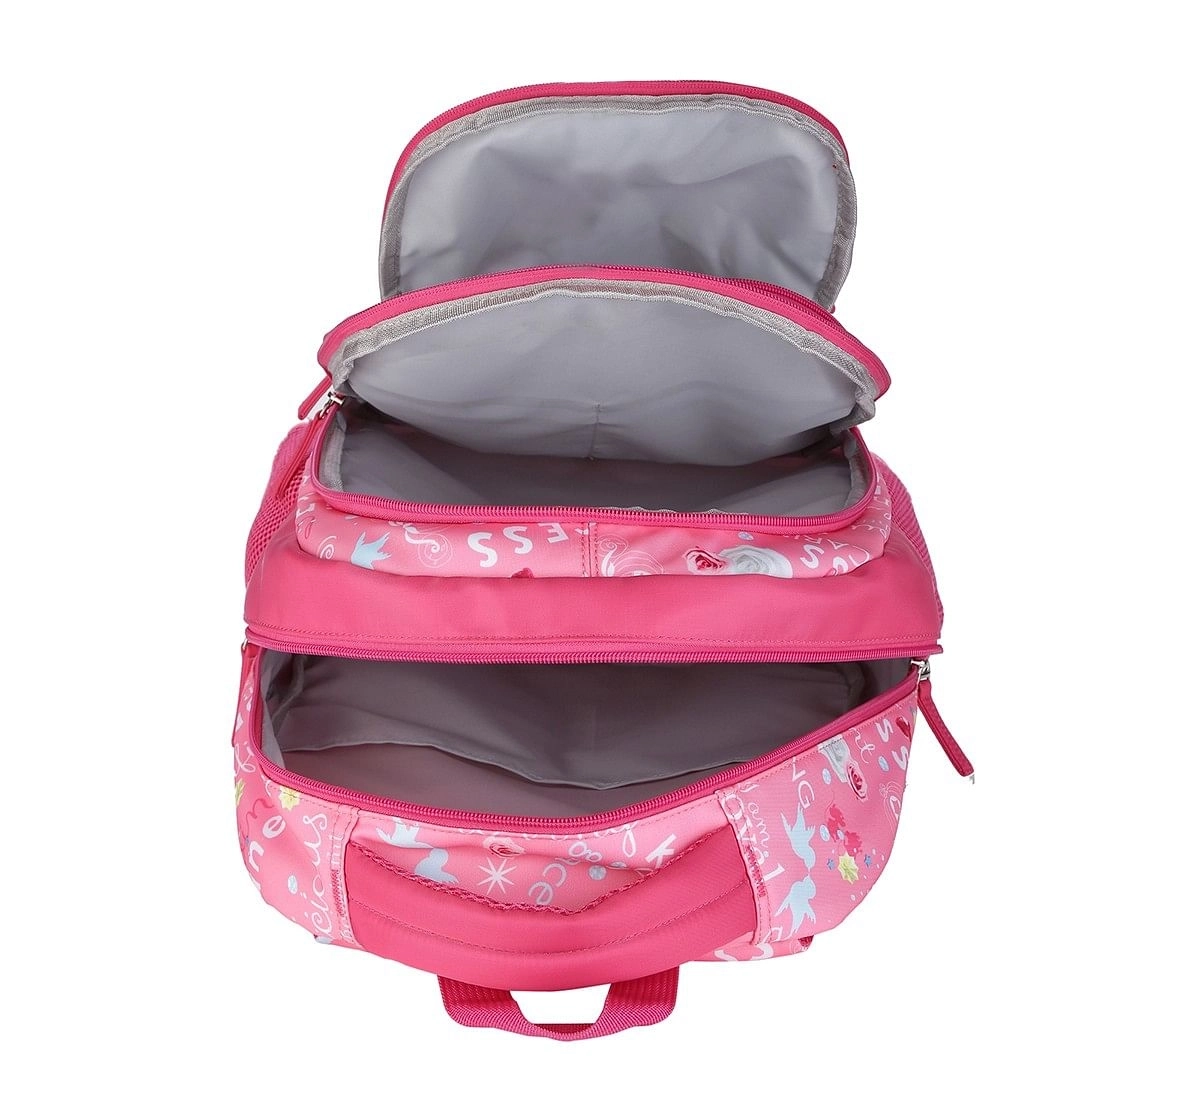 Disney Princess Believe In Friendship Pink 19" Backpack Bags for age 3Y+ 